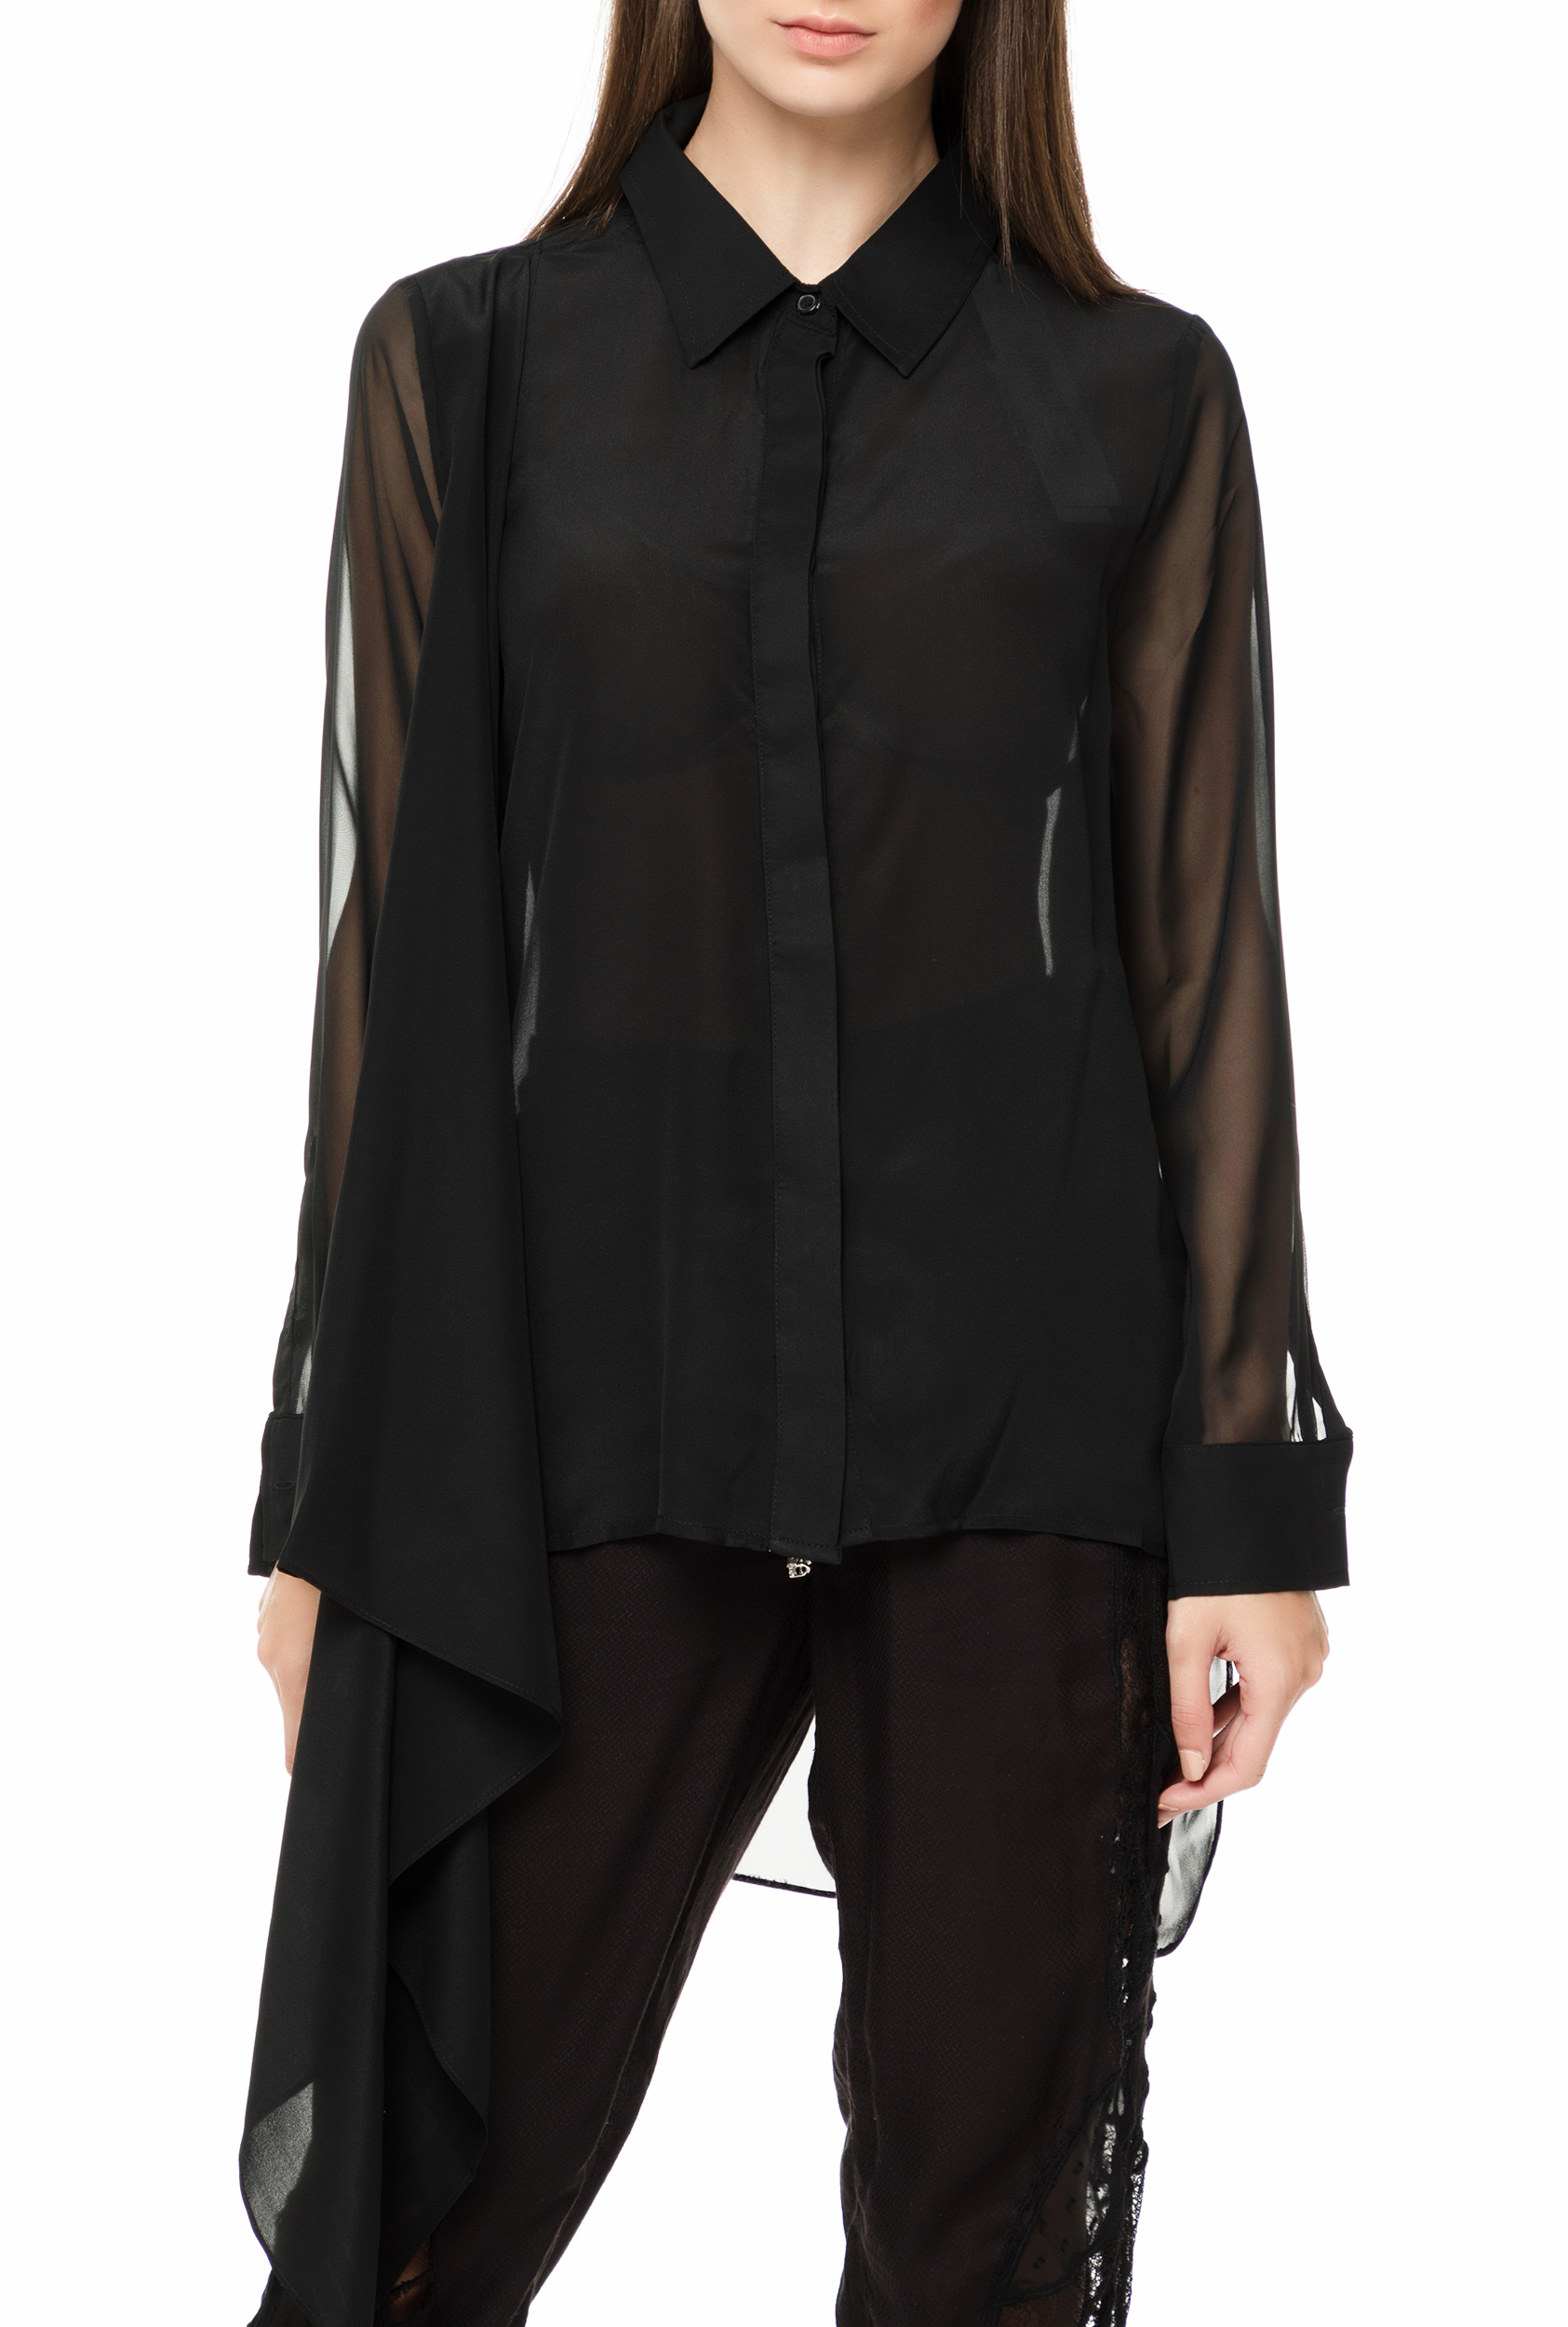 RELIGION – Γυναικείο μακρυμάνικο πουκάμισο RELIGION DYNAMIC μαύρο